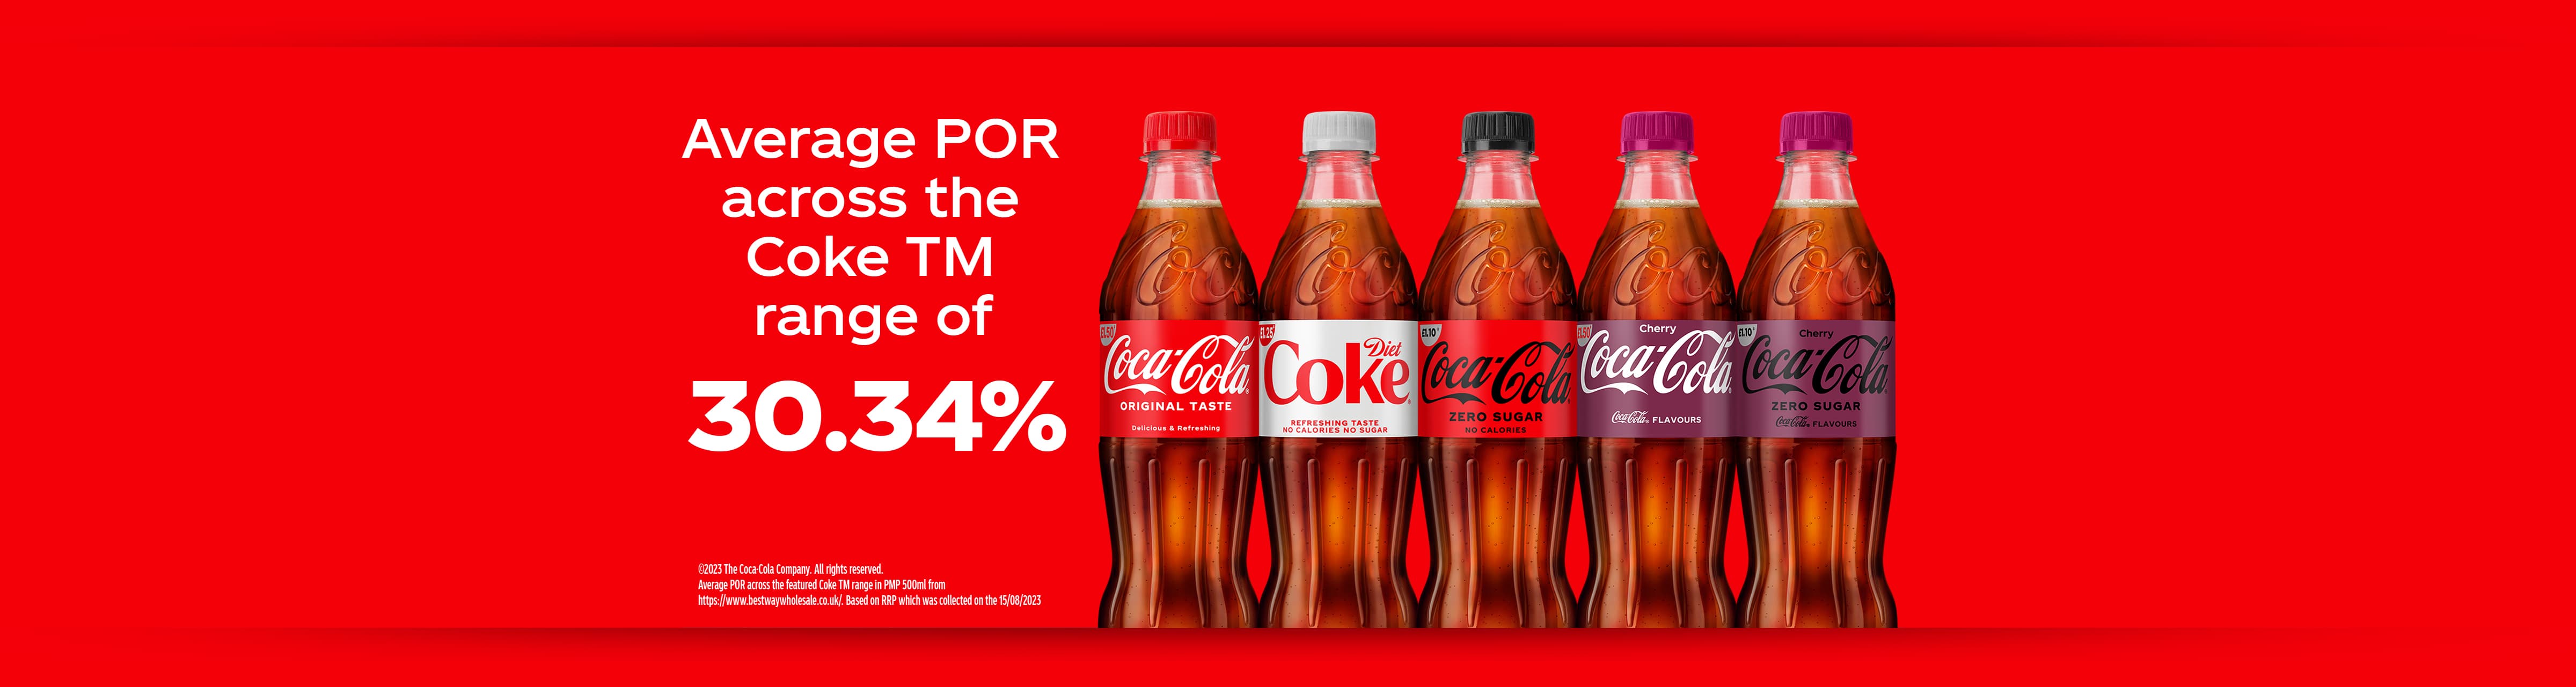 Average POR across the Coke TM range of 30.34%